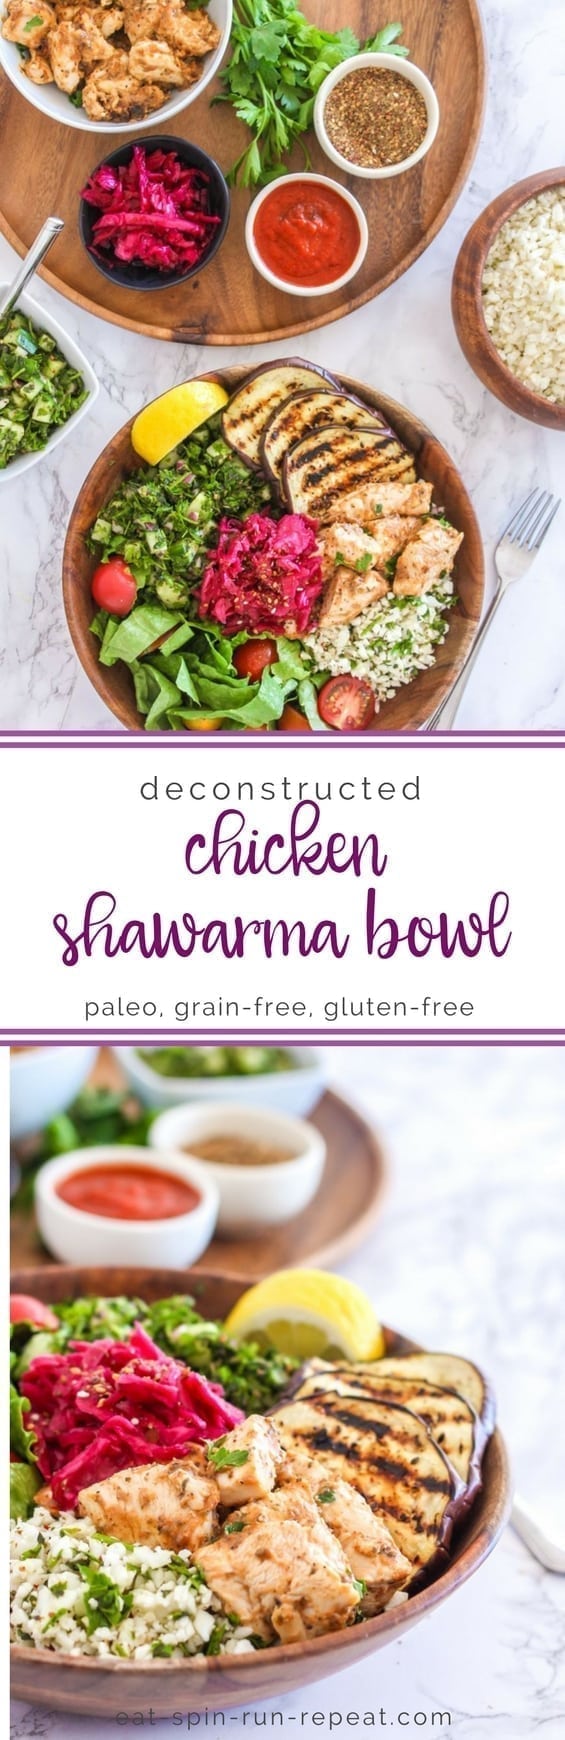 Chicken Shawarma Bowls - paleo, grain-free and gluten-free || Eat Spin Run Repeat